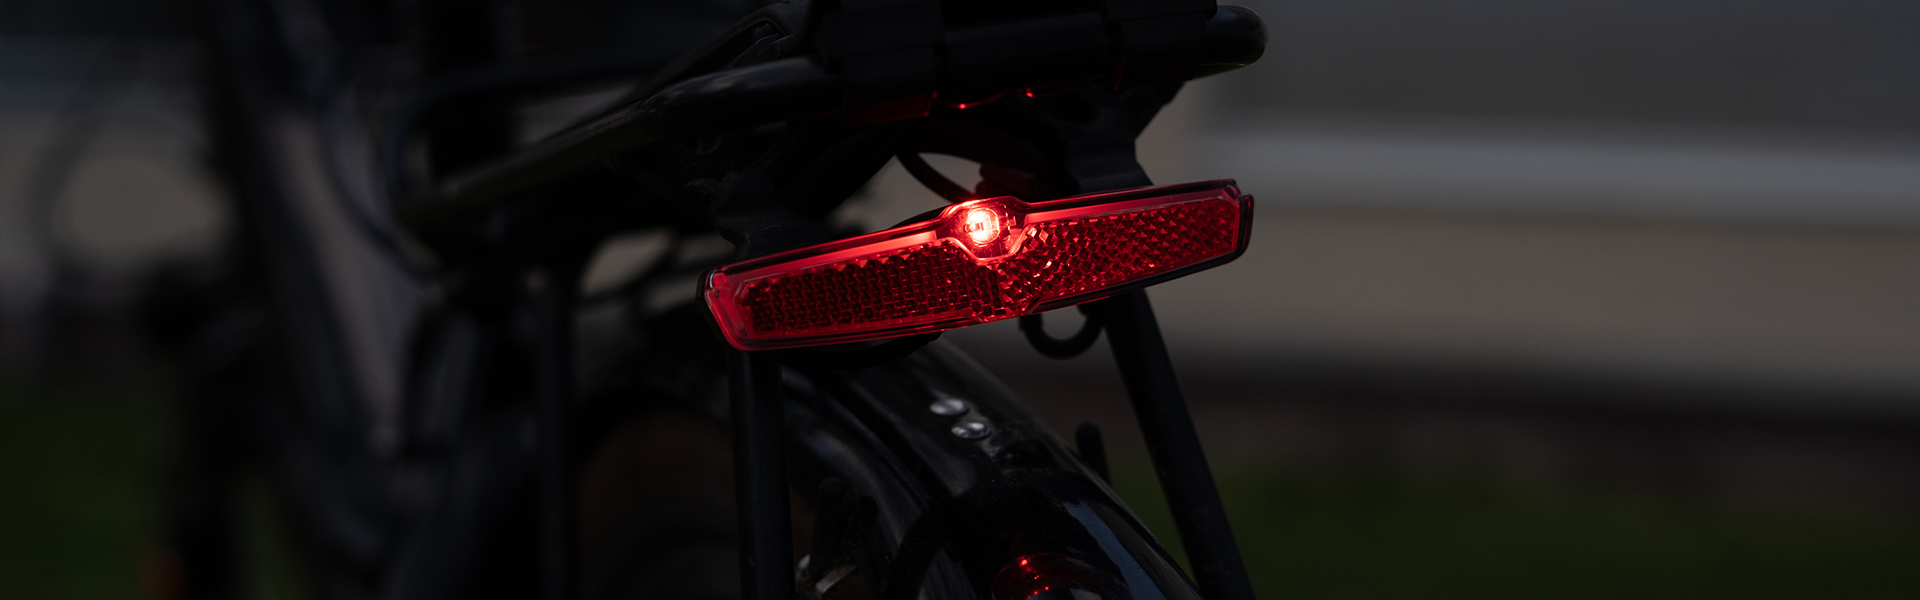 Sate-lite OSRAM 80lux ebike light ISO 6721-1 StVZO ECE eletric bike headlight with ECE reflector front fork 12-58V